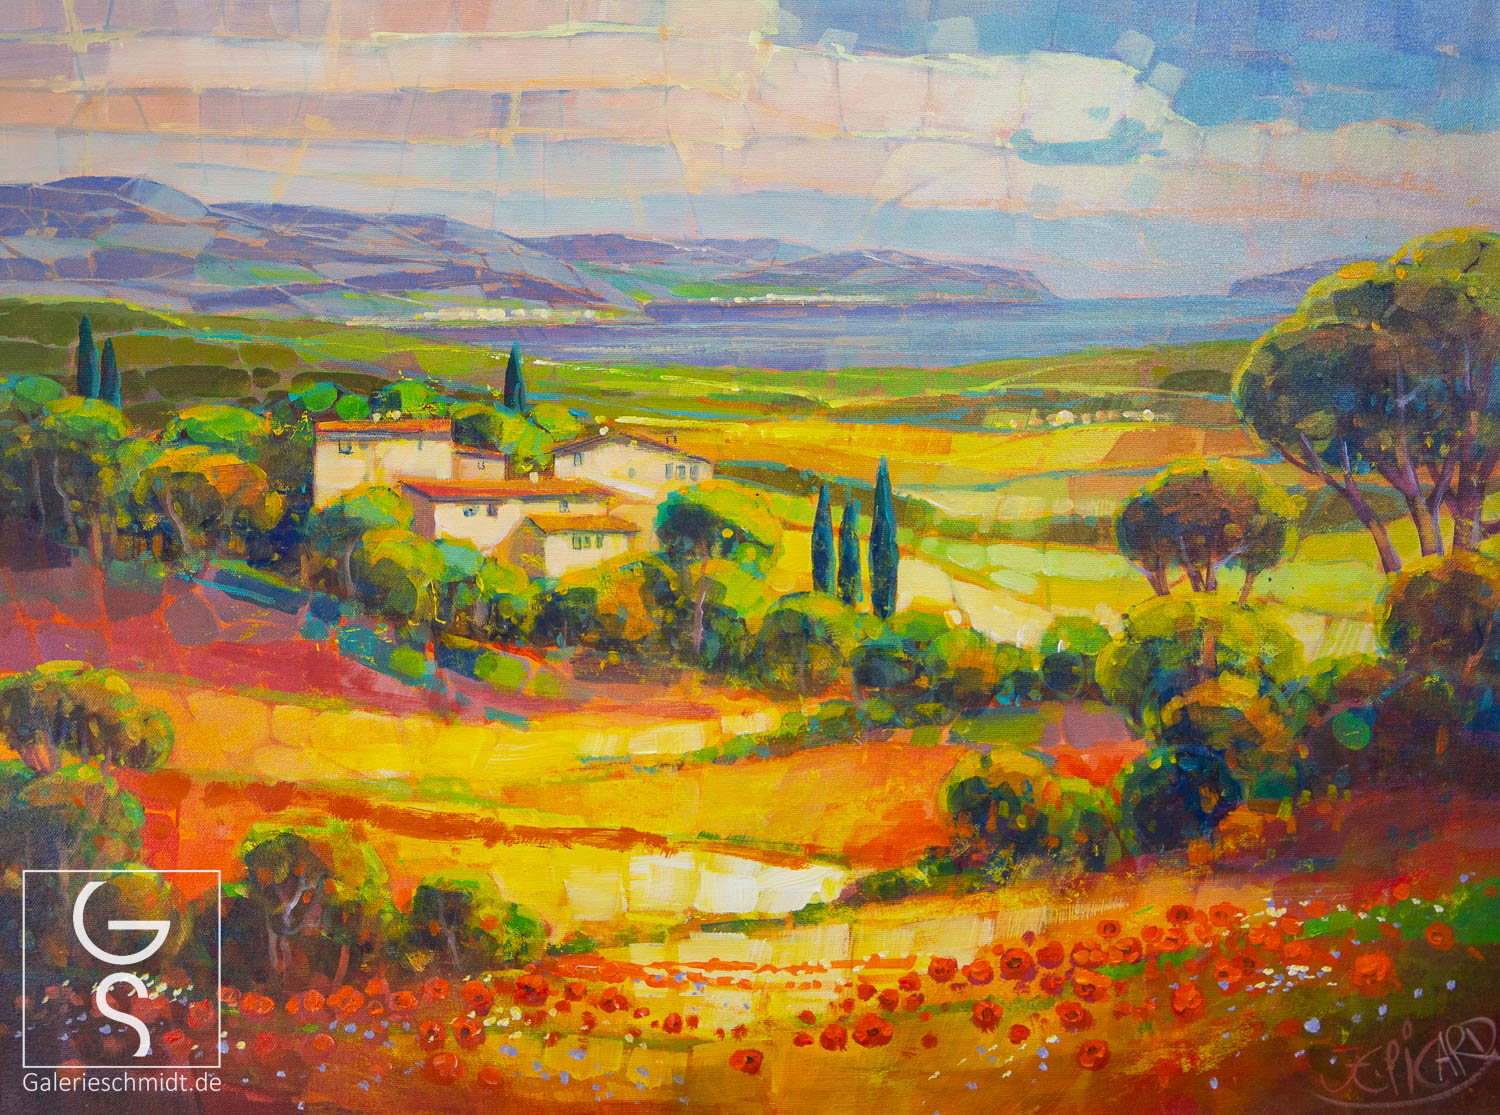 Dorf am Meereshang von Jean-Claude Picard. Gemälde eines mediterranen Dorfes in Kunstgalerie.